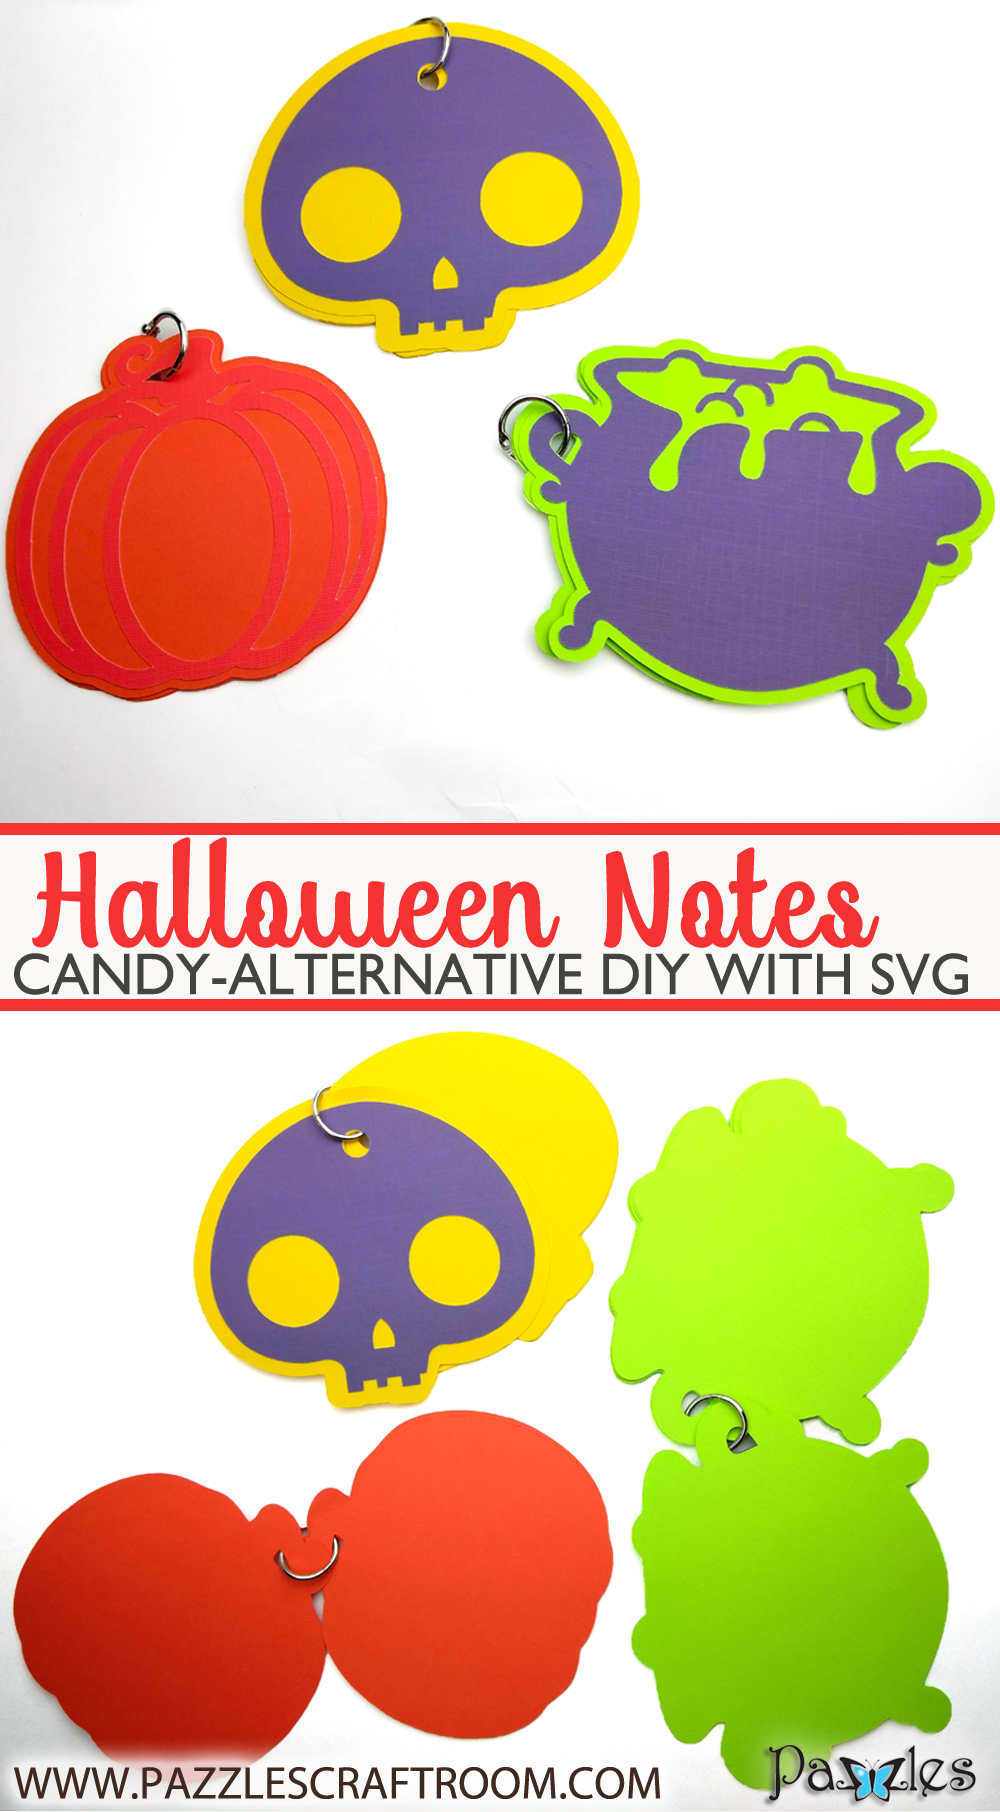 Pazzles DIY Halloween Treat Notes by Renee Smart